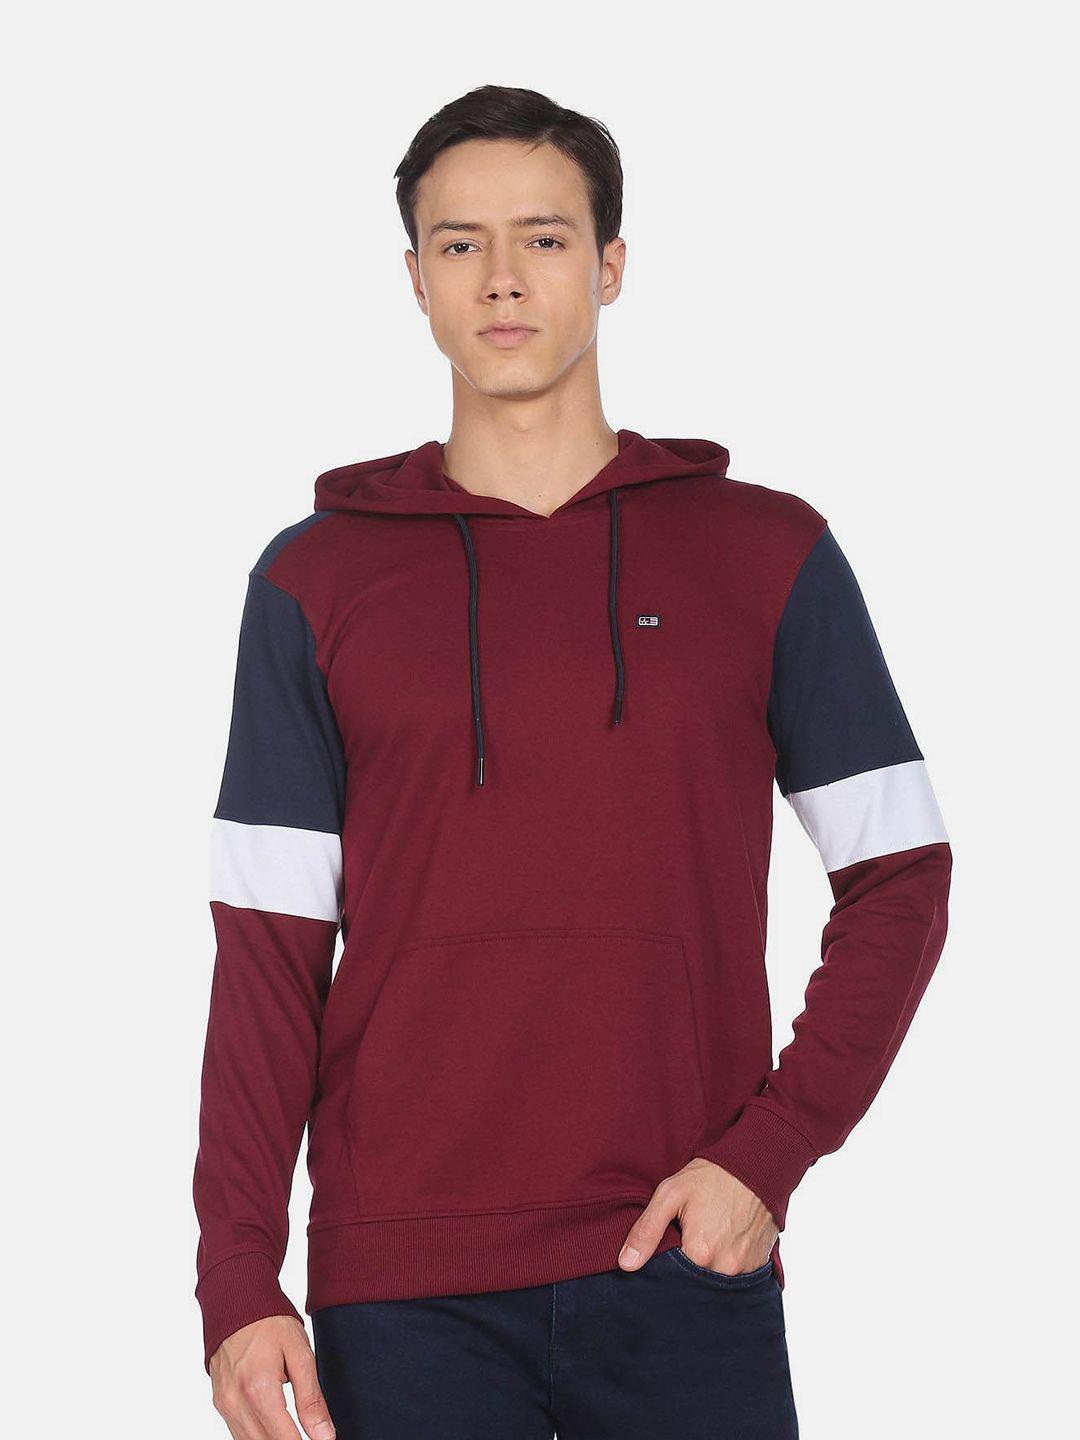 arrow sport hooded neck sweatshirt